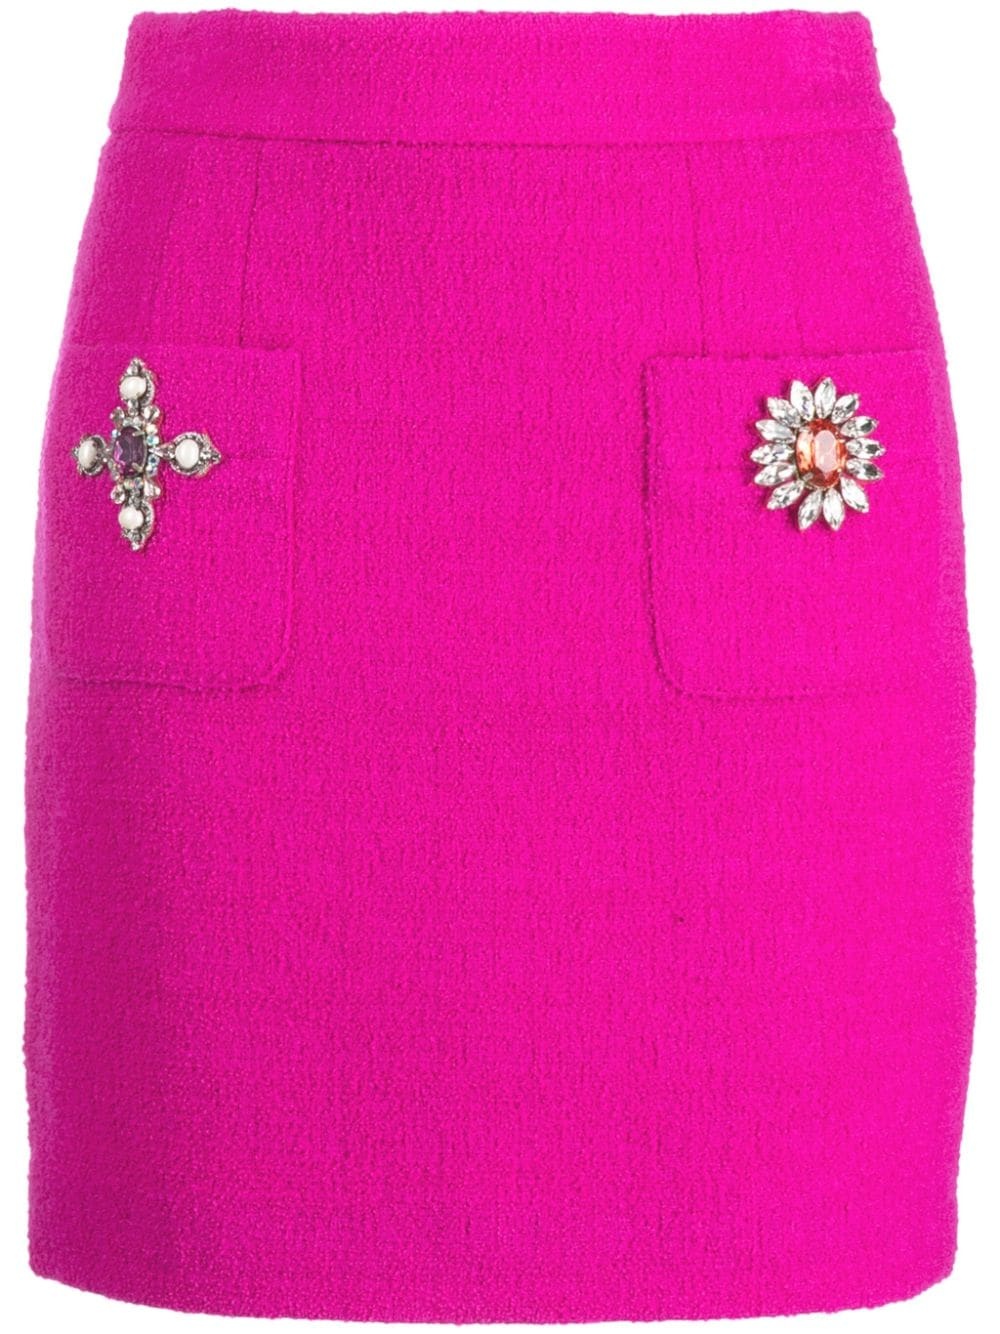 high-waisted crystal-embellished miniskirt - 1